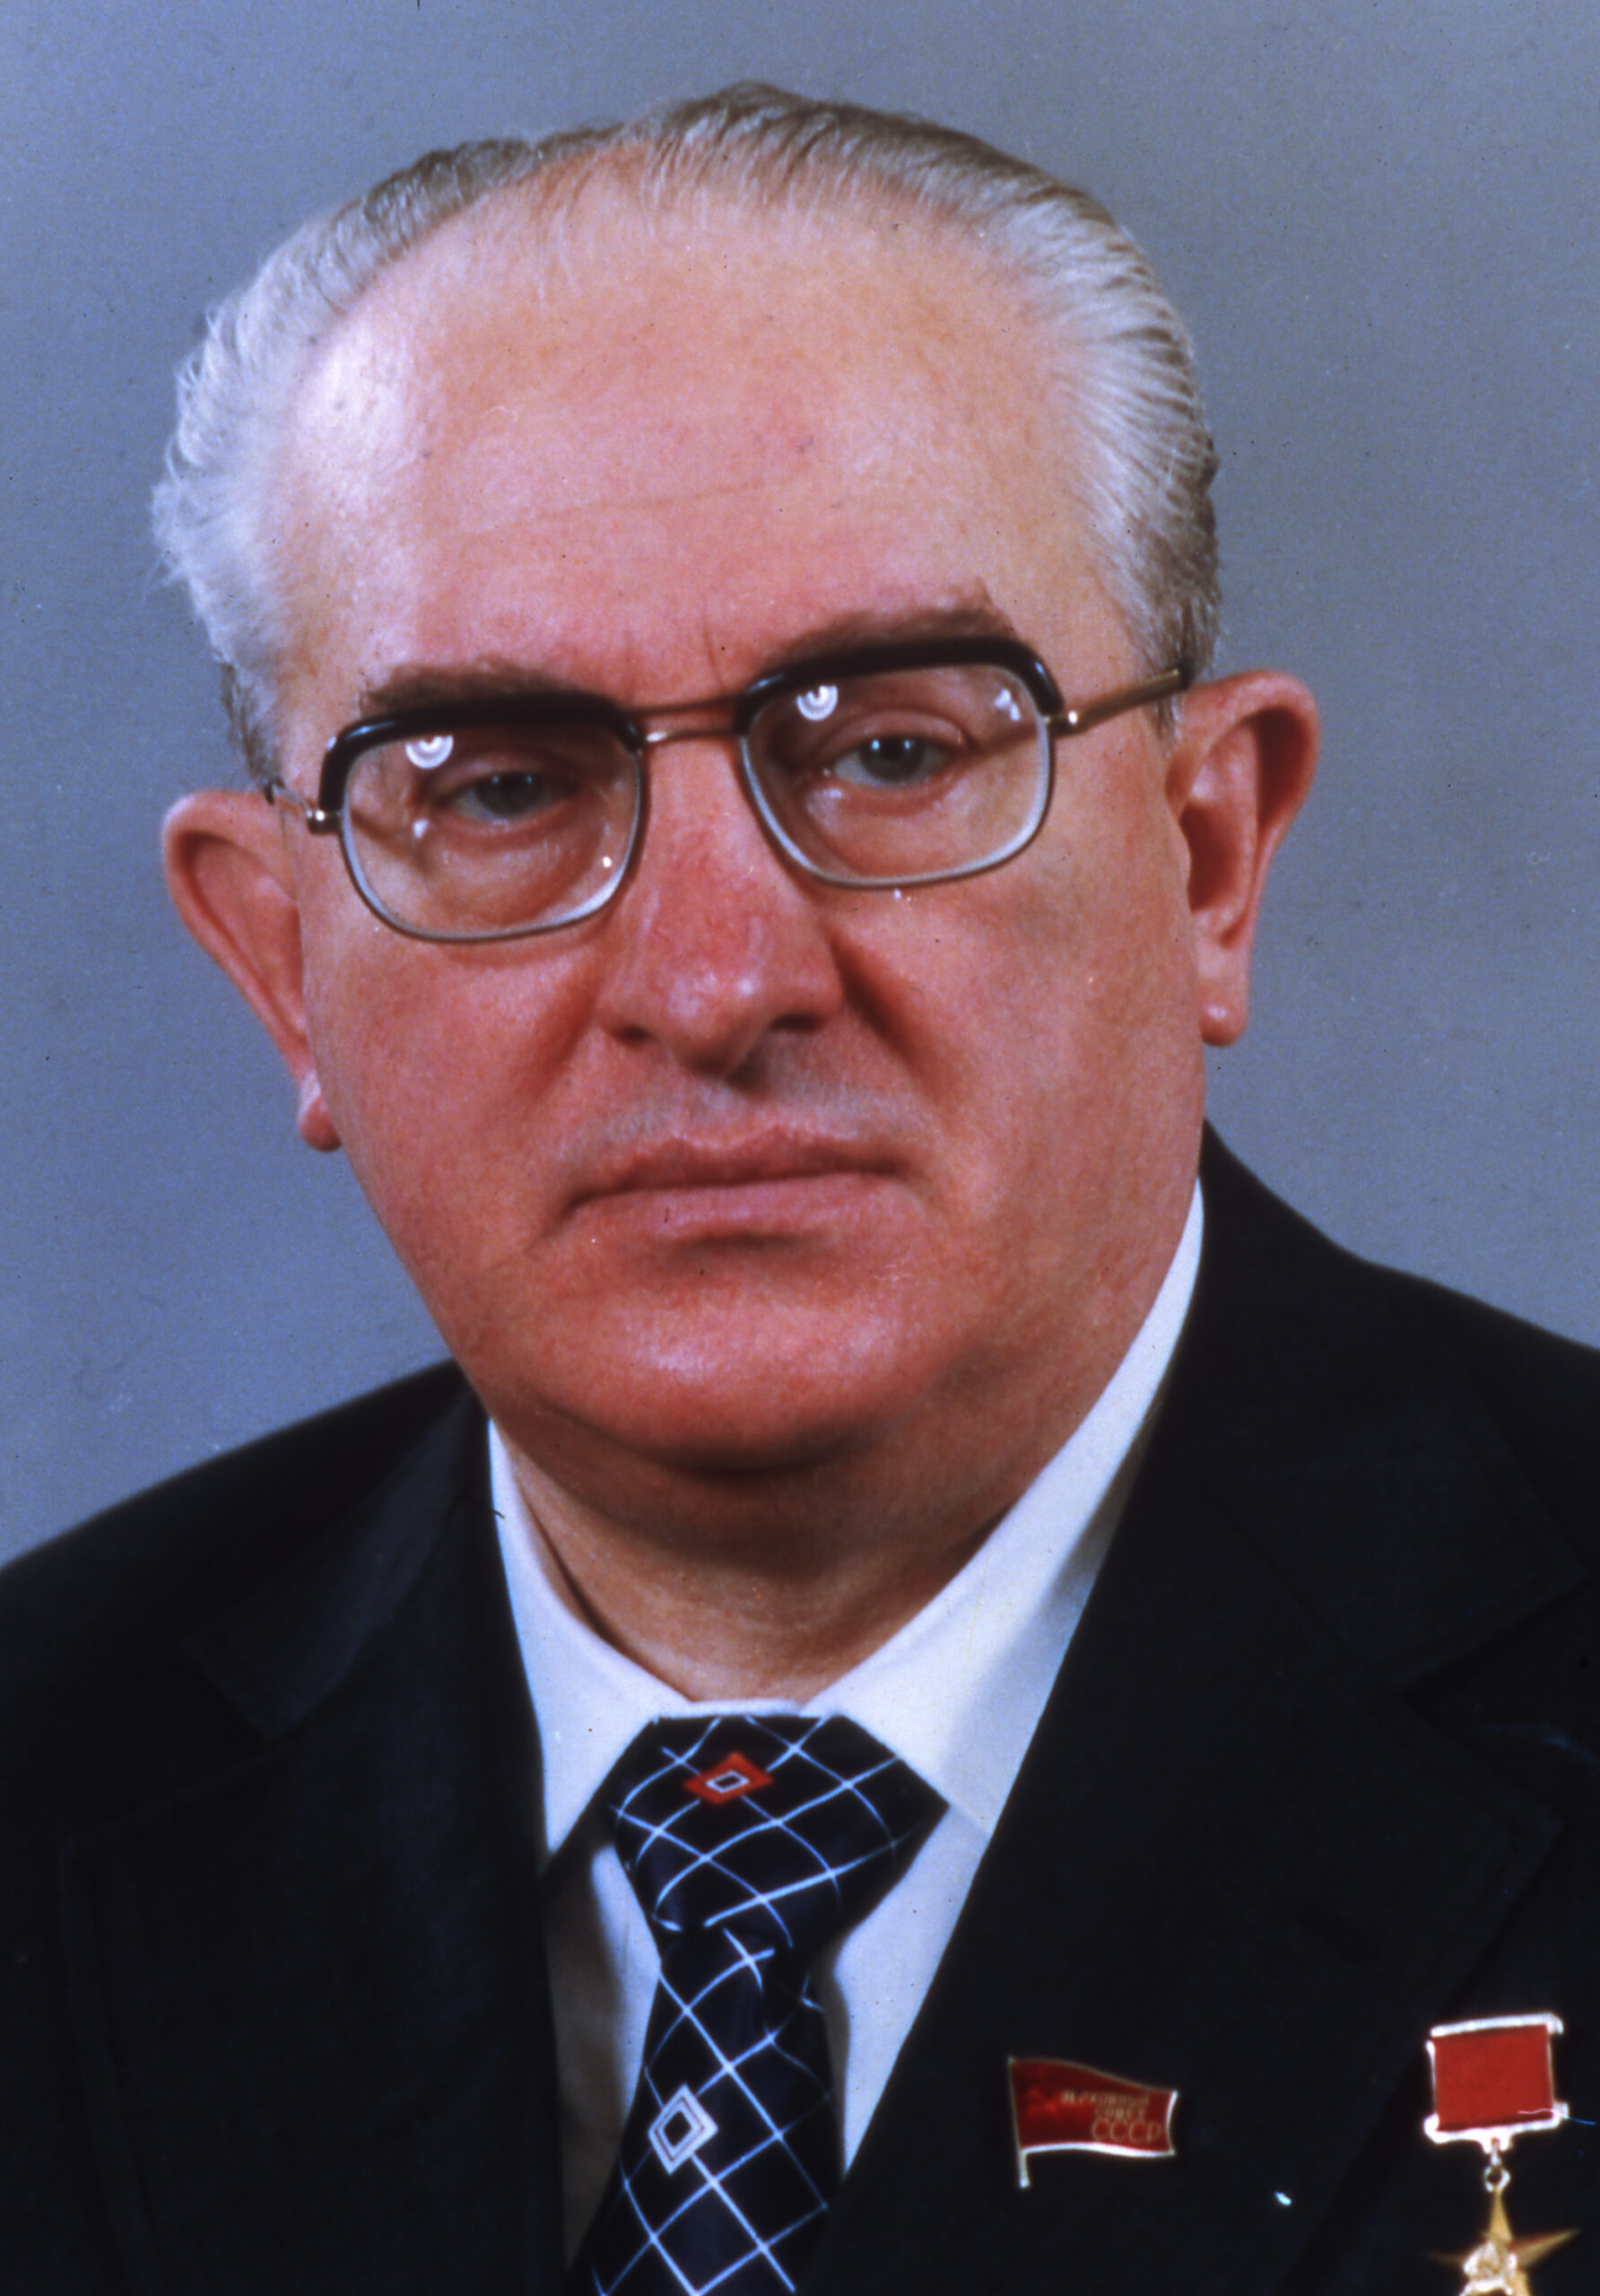 1979 portrait of Yuri V. Andropov